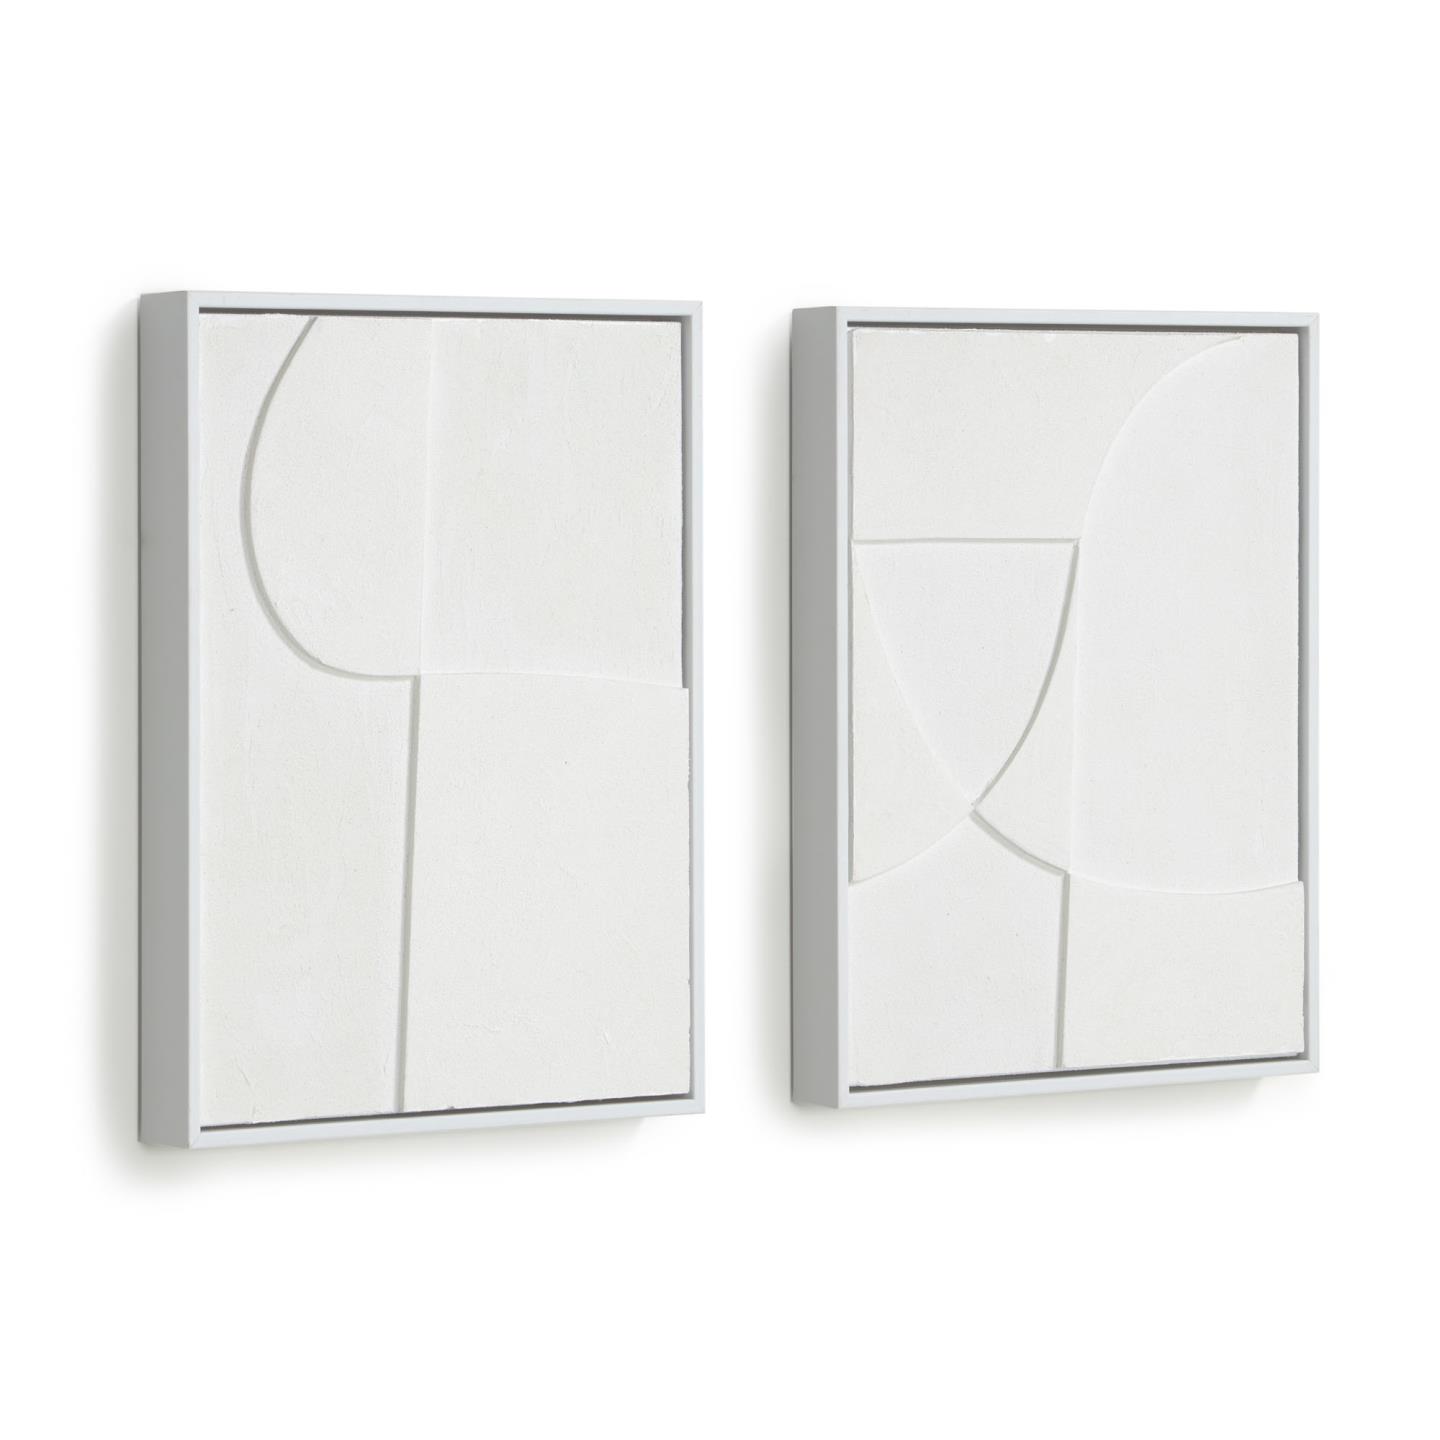 LAFORMA Beija maleri, rektangulær - hvid akrylmaling på lærred (32x42) (sæt med 2)